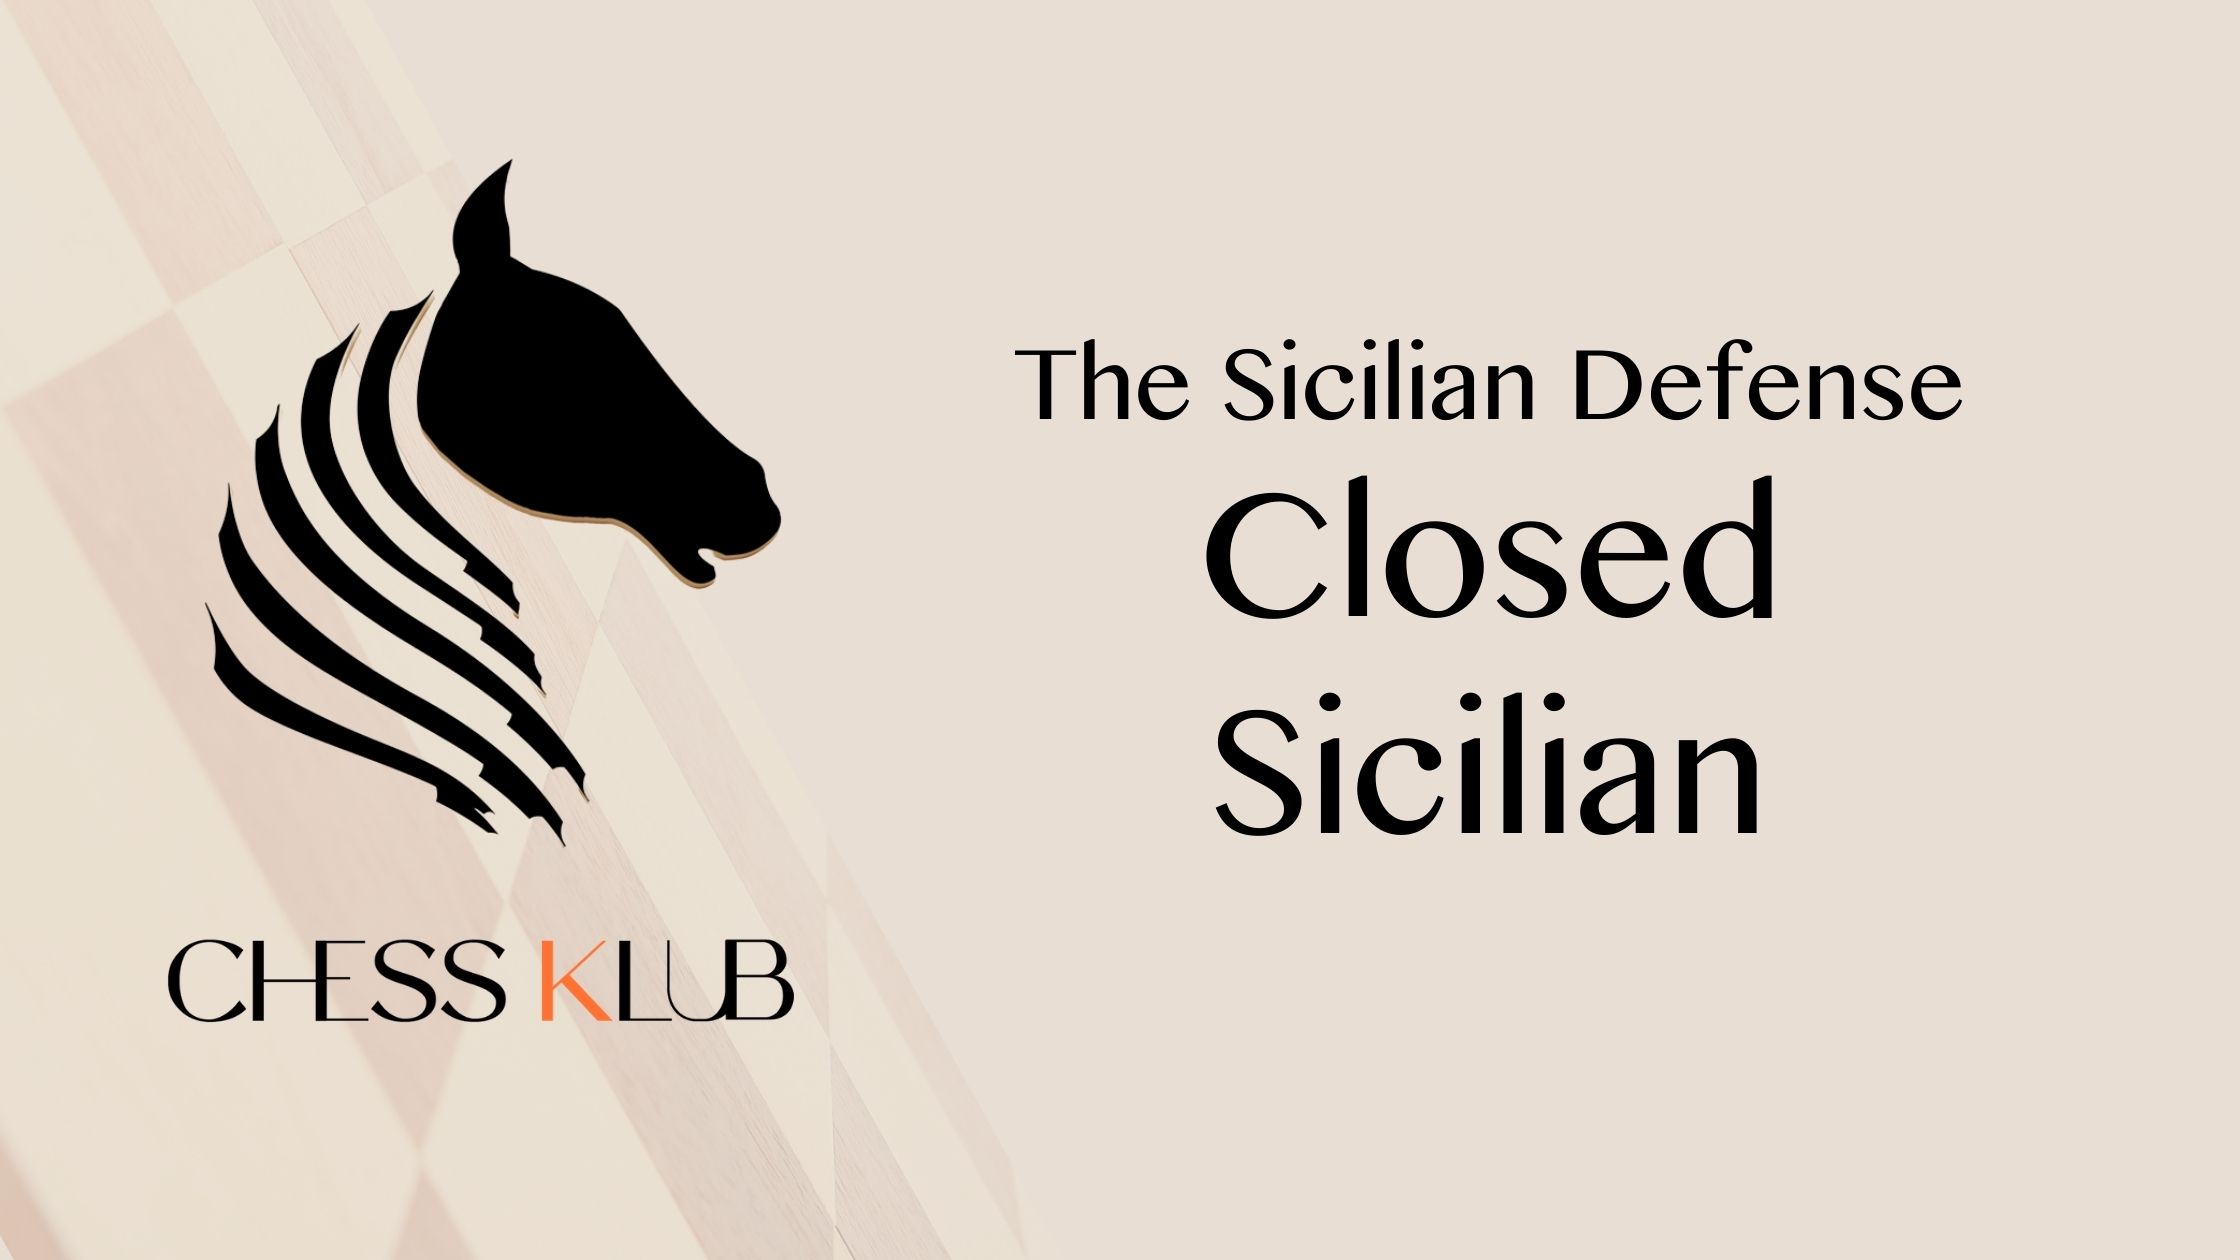 Blitz chess postmortem #817: Sicilian defense - Bowdler attack 